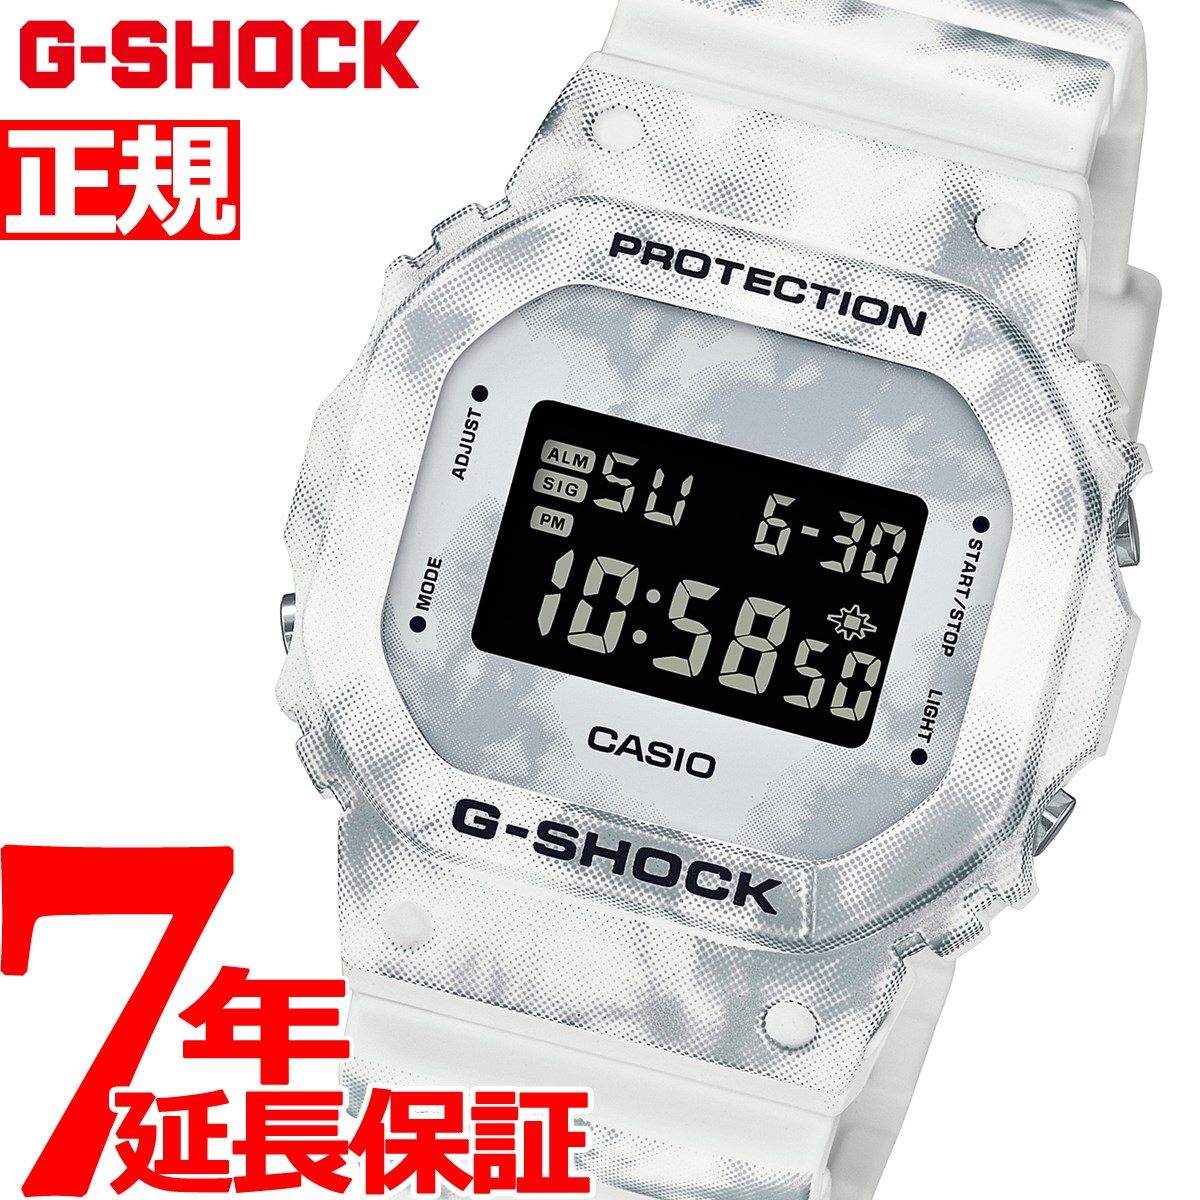 G-SHOCK Gショック 限定モデル メンズ 腕時計 DW-5600GC-7JF GRUNGE SNOW CAMOUFLAGE CASIO カシオ